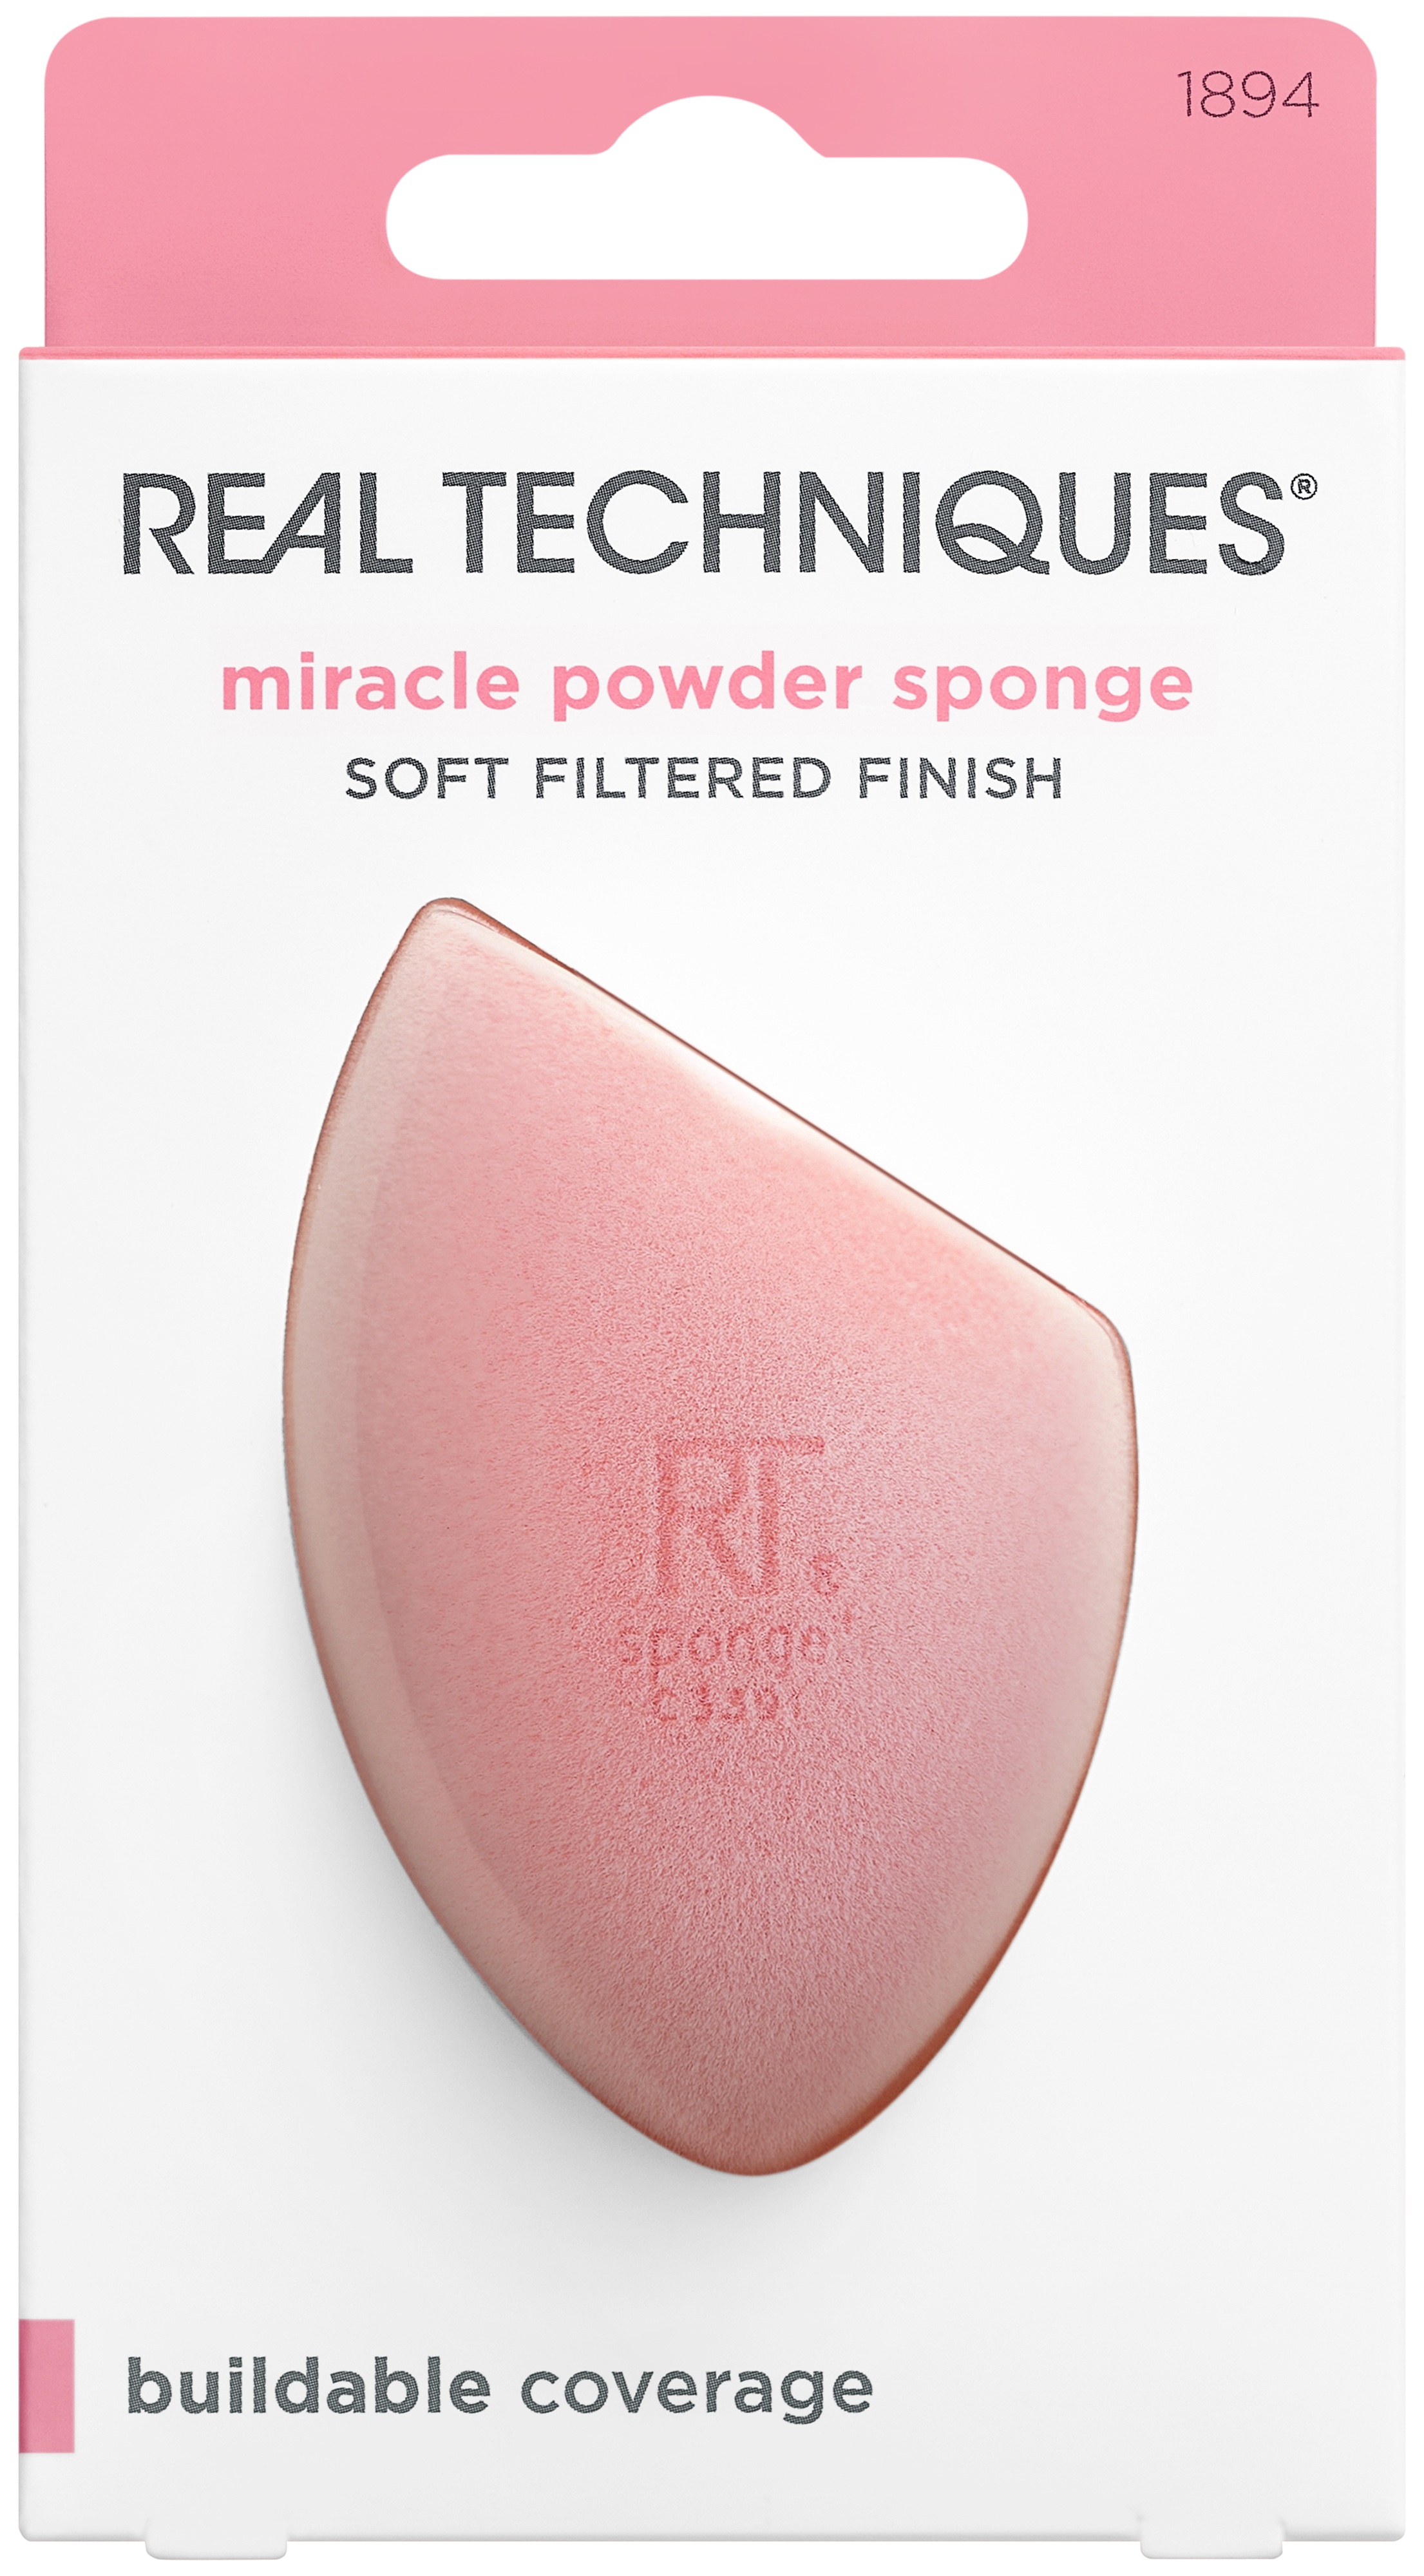  Miracle Powder Sponge